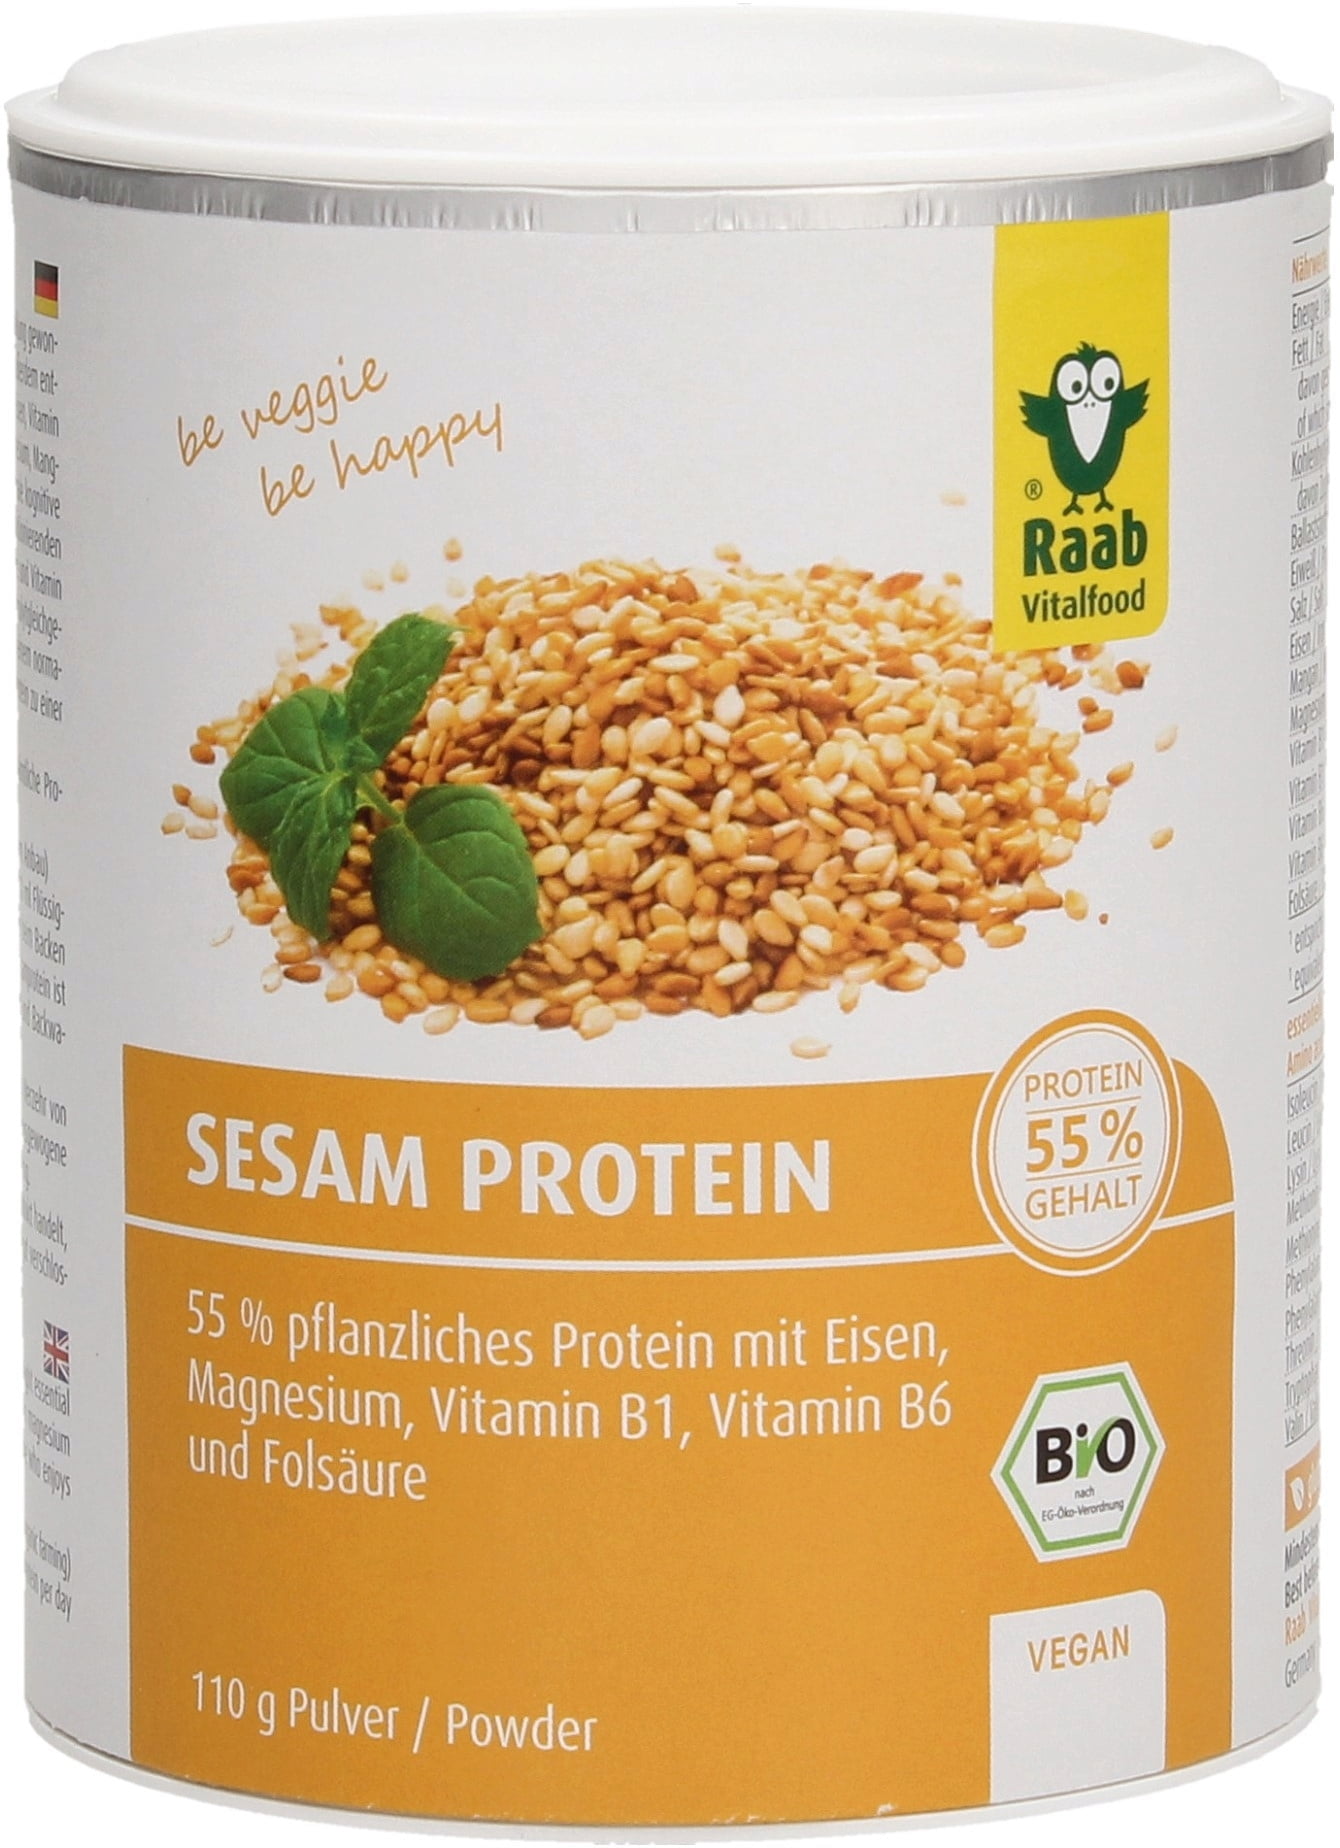 Raab Vitalfood Bio Sesam Protein Pulver - 110 g